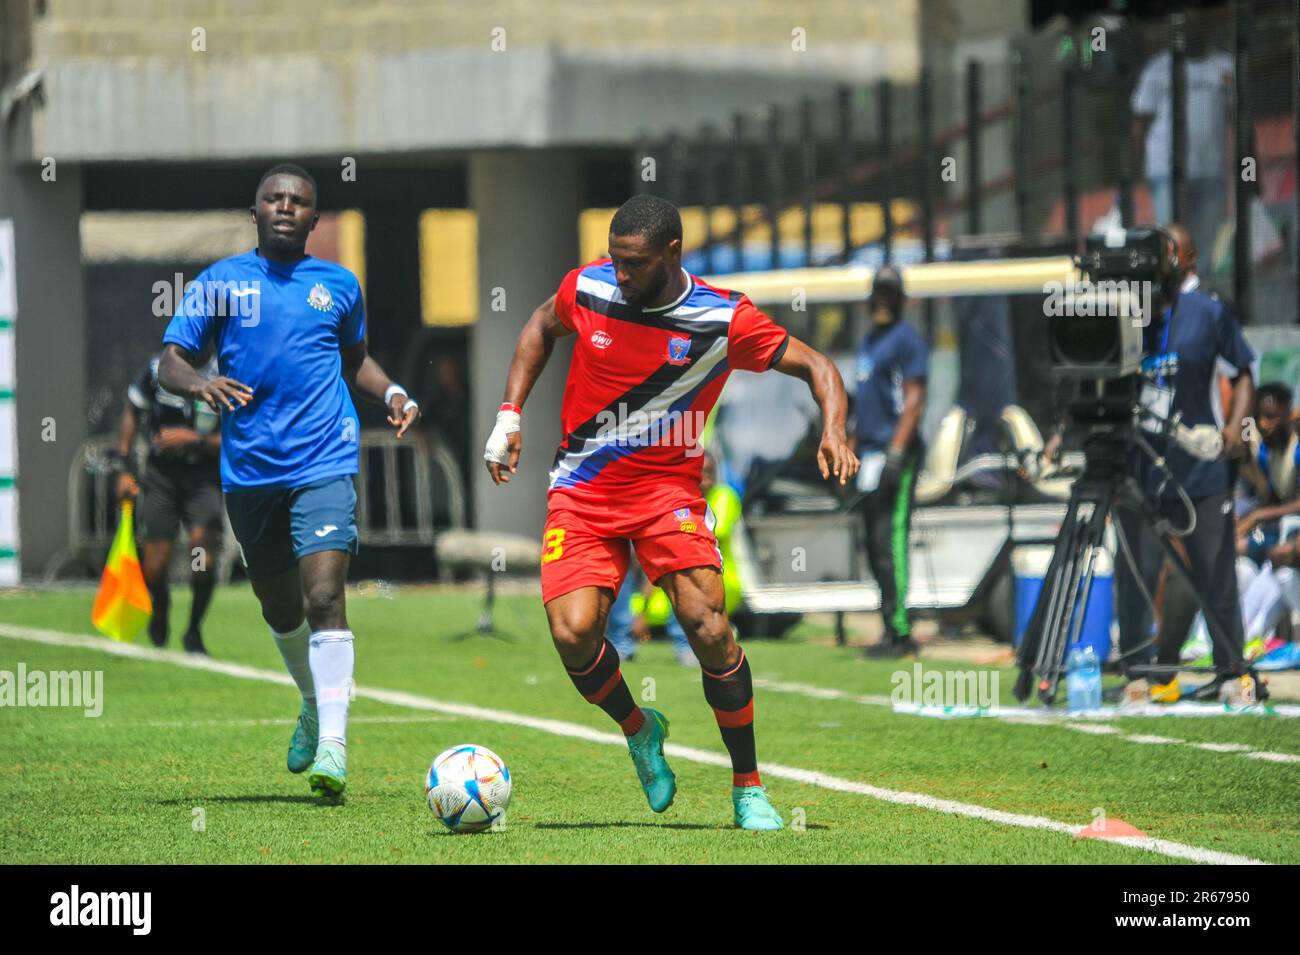 The Nigeria Professional Football League (NPFL) - Super League match between Lobi Stars and Enyimba at Mobolaji Bank, Anthony Stadium. Lagos, Nigeria. Stock Photo